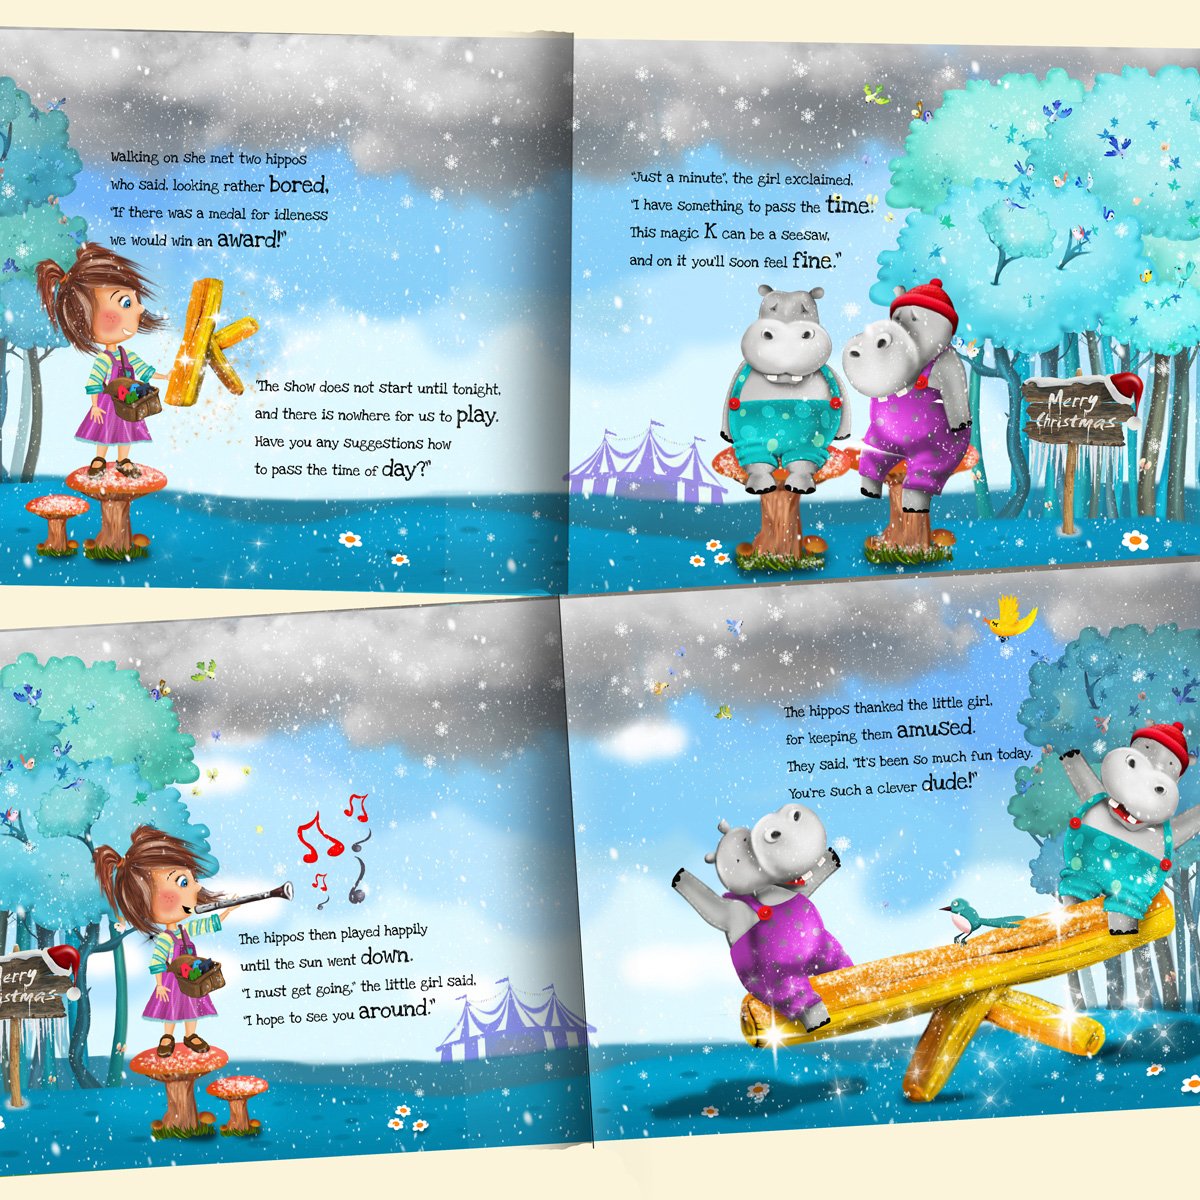 Personalised Children's Book - Christmas Magic Name